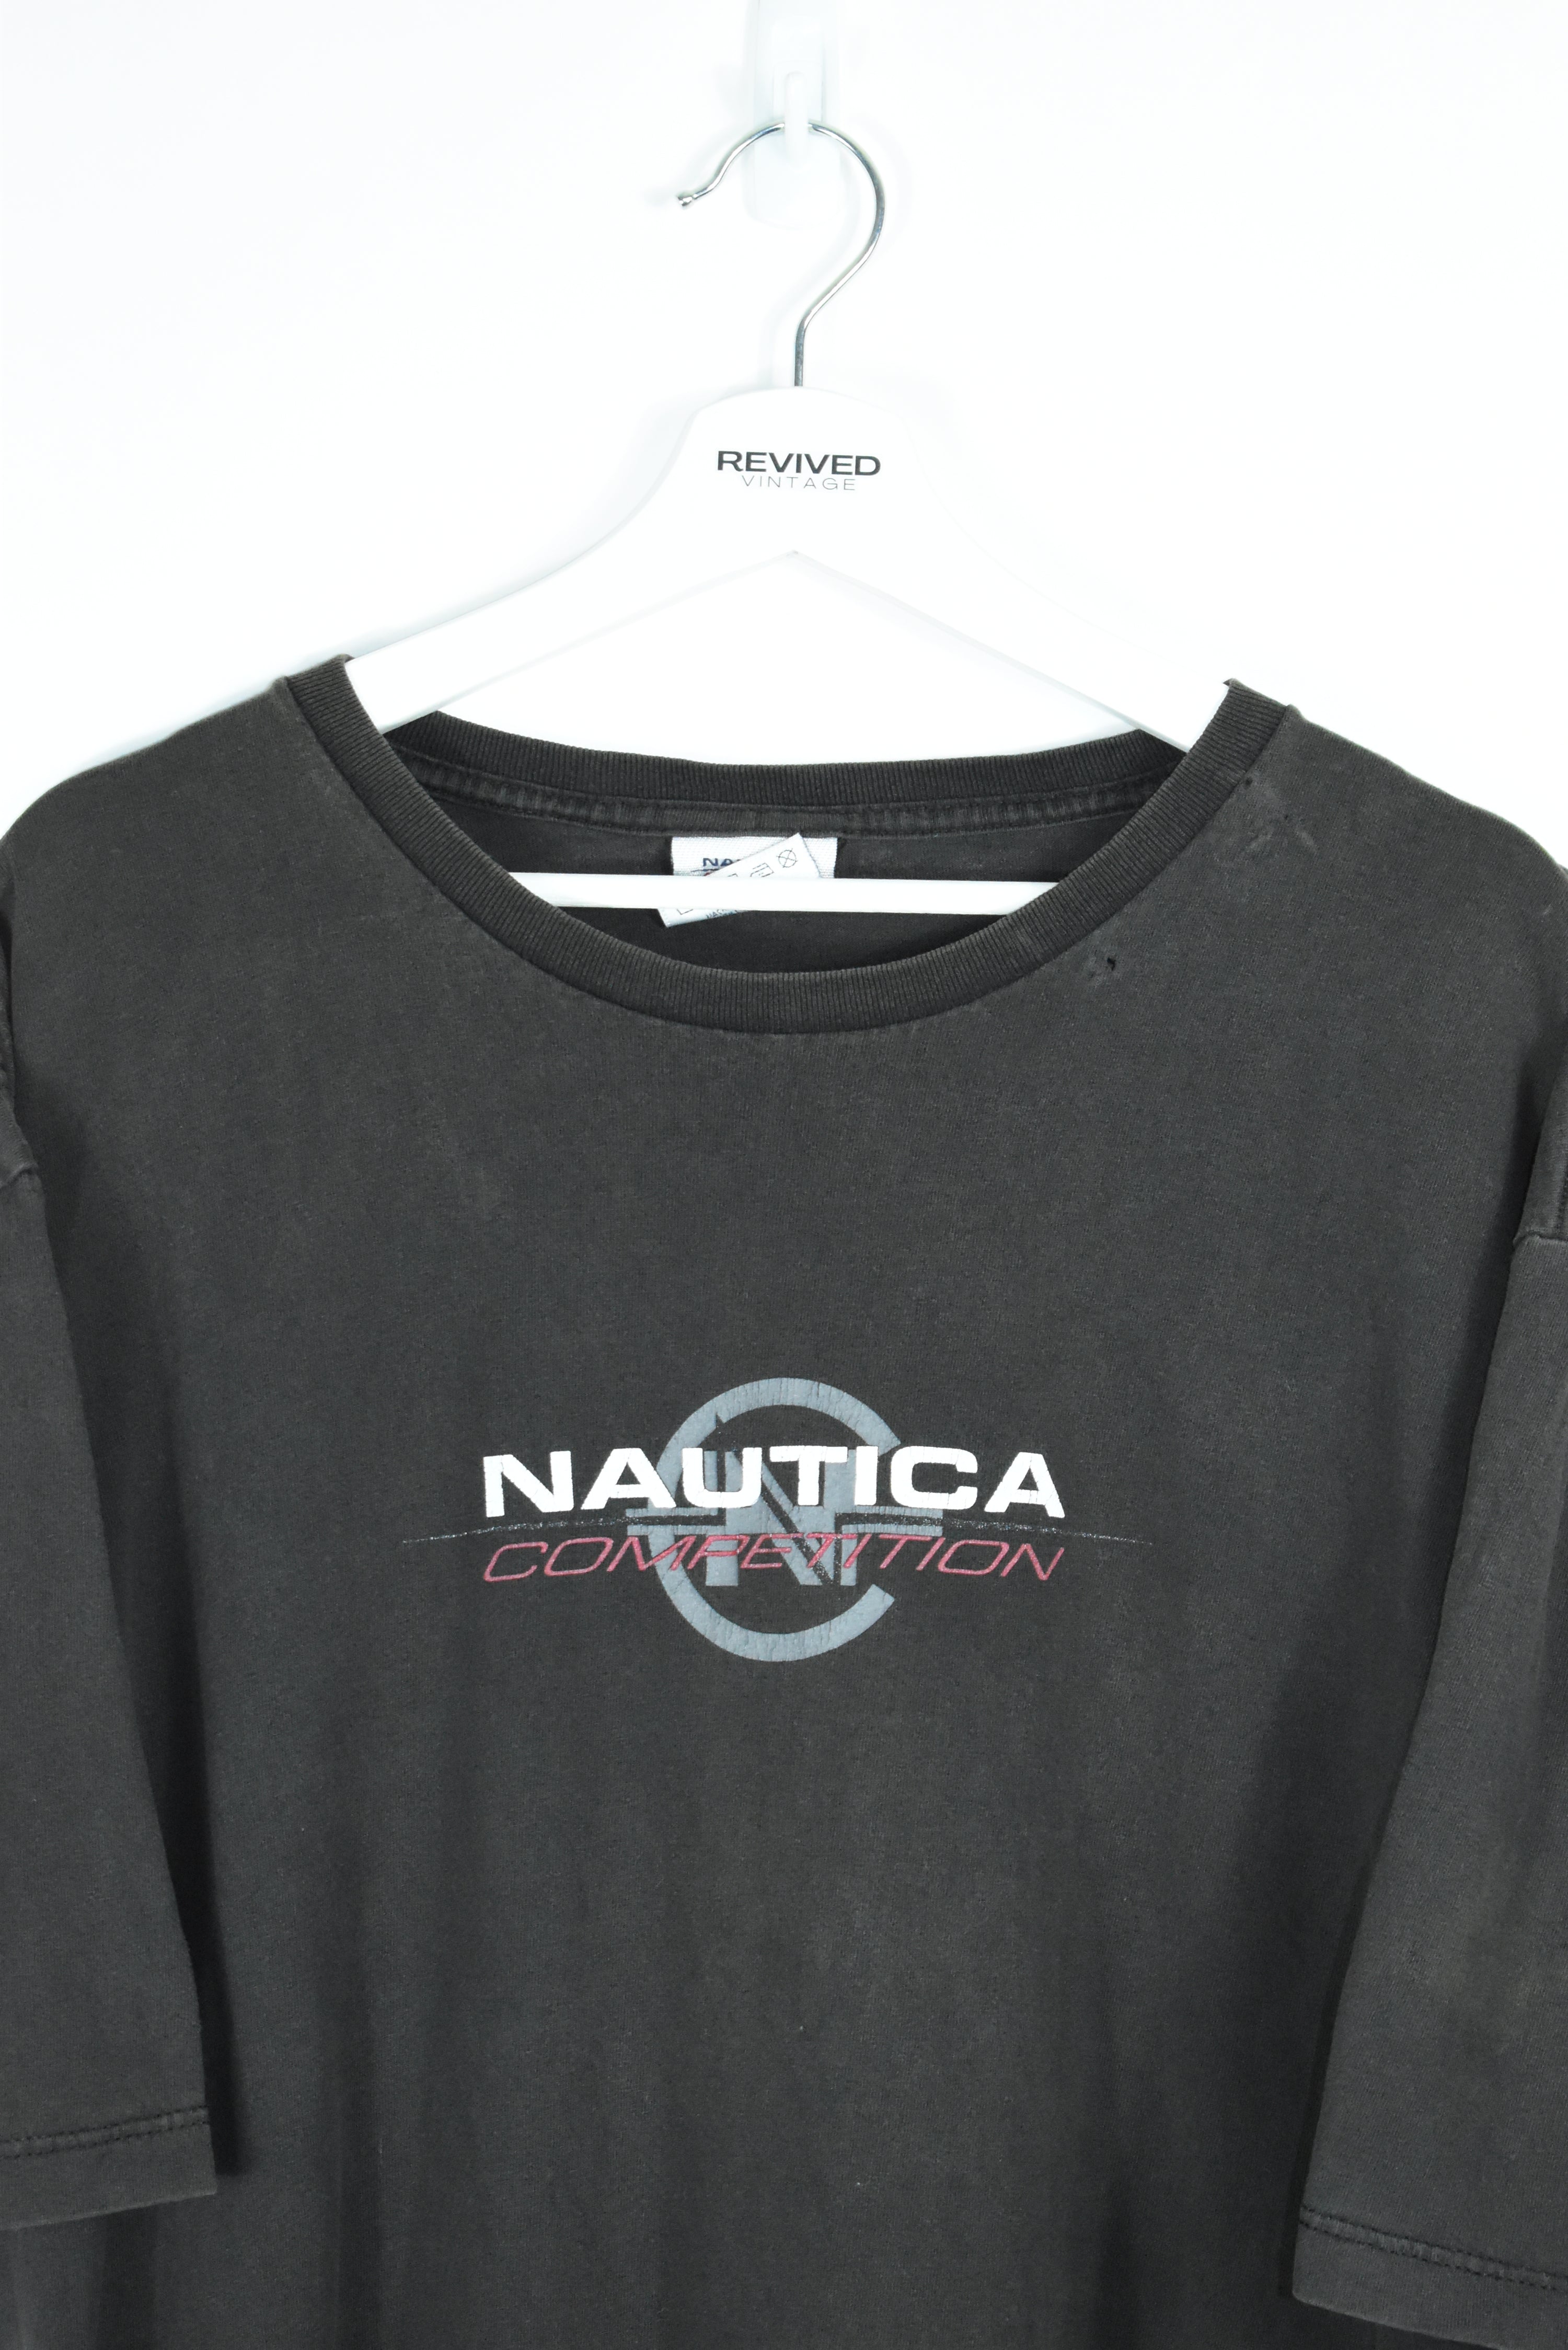 Vintage Nautica Competition T Shirt XXL